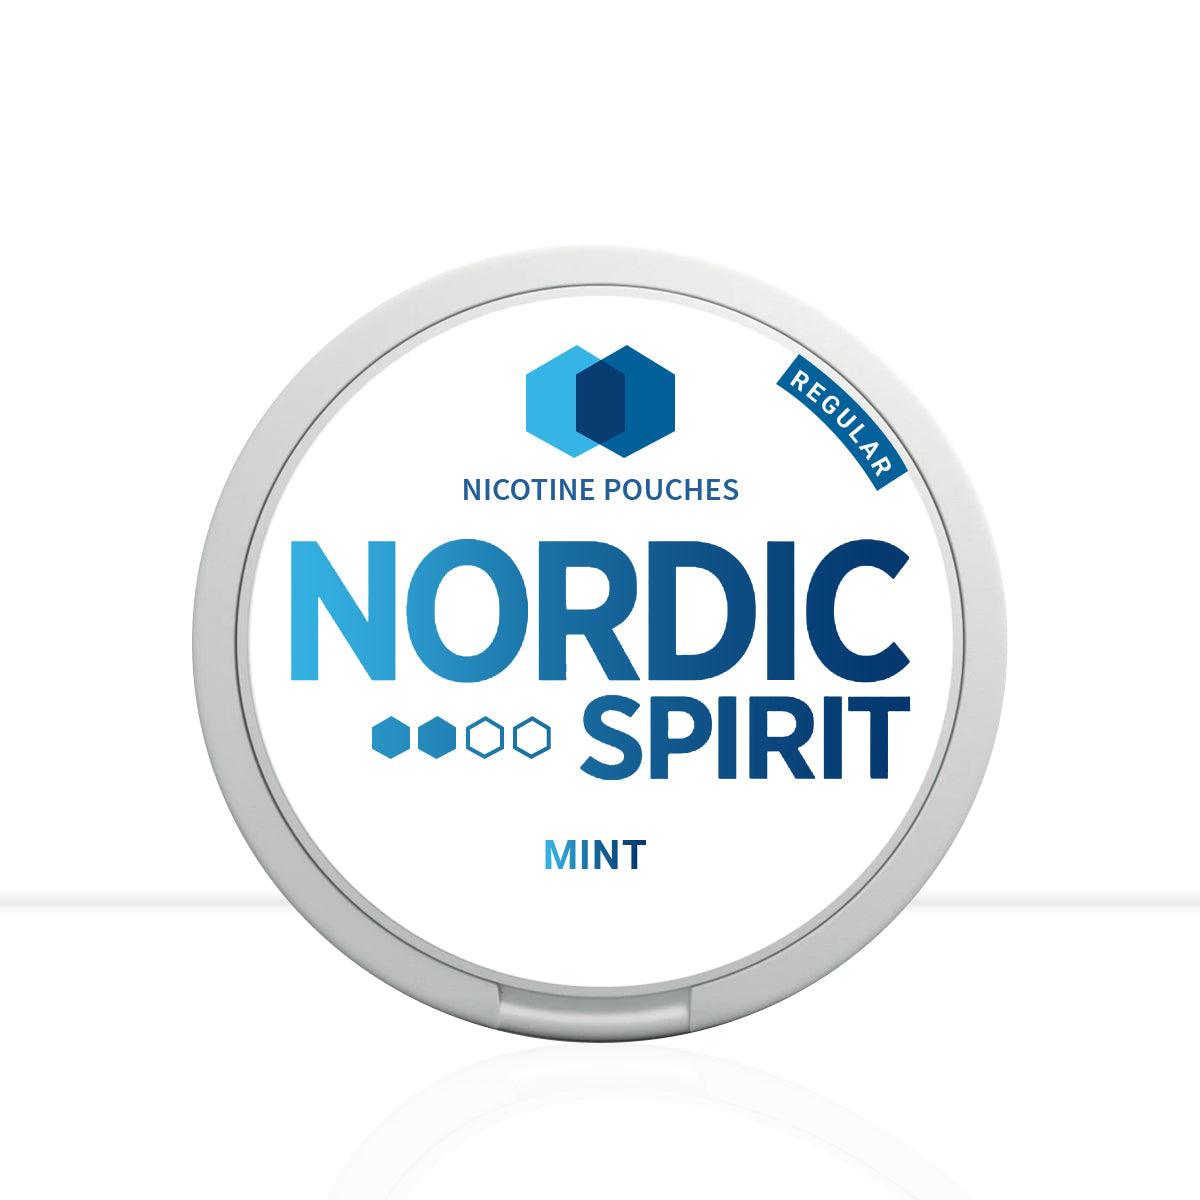 Nordic Spirit Nicotine Pouches Mint - Accessories